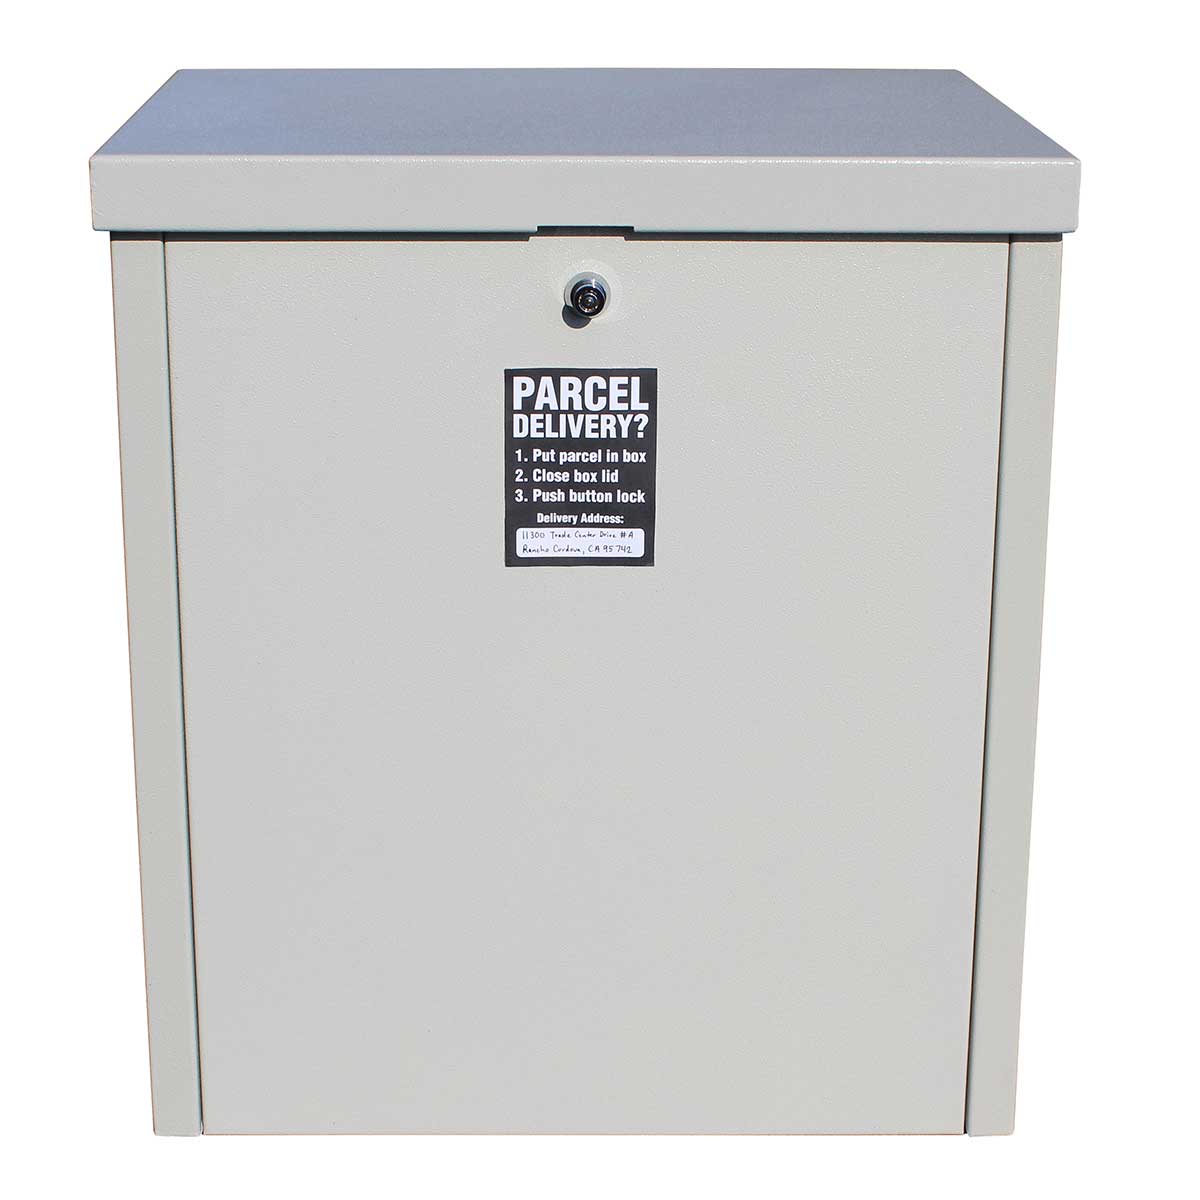 ParcelChest Secure Delivery Box (Medium Size)